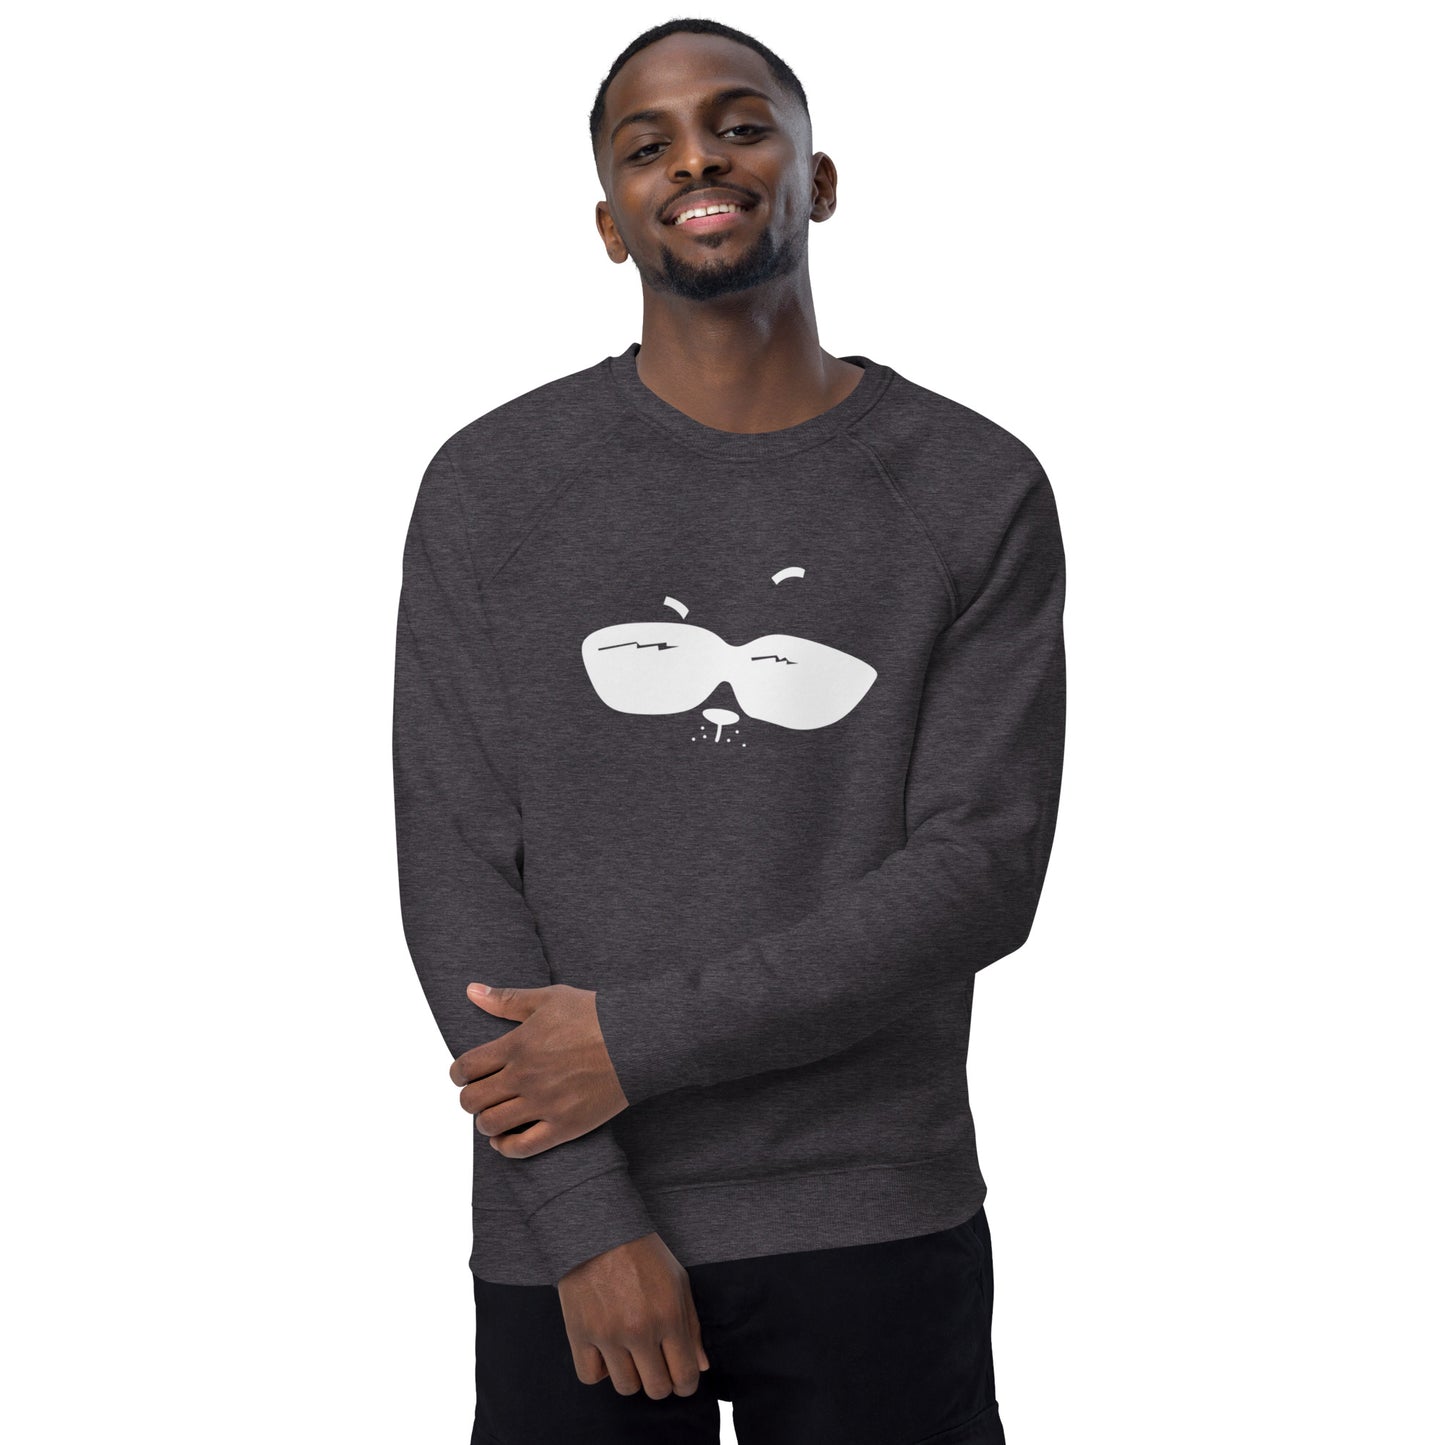 Men's Organic Sweatshirt "I See You"